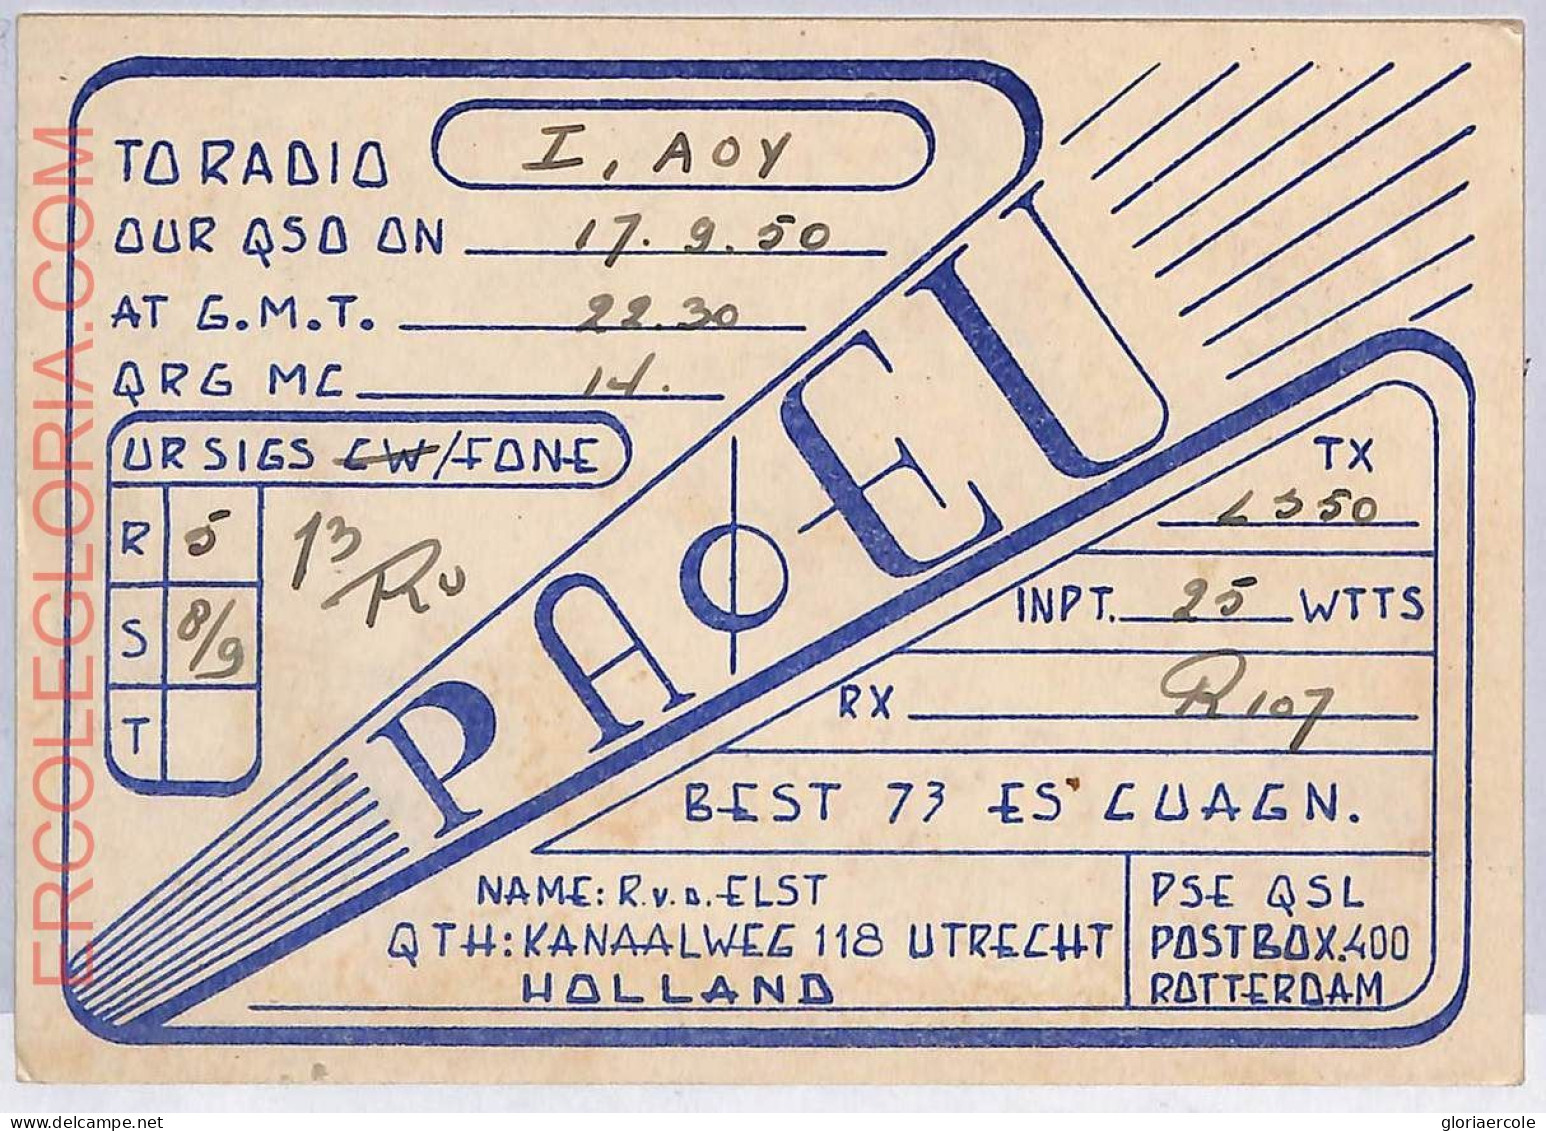 Ad9226 - Netherlands - RADIO FREQUENCY CARD  - 1950 - Radio